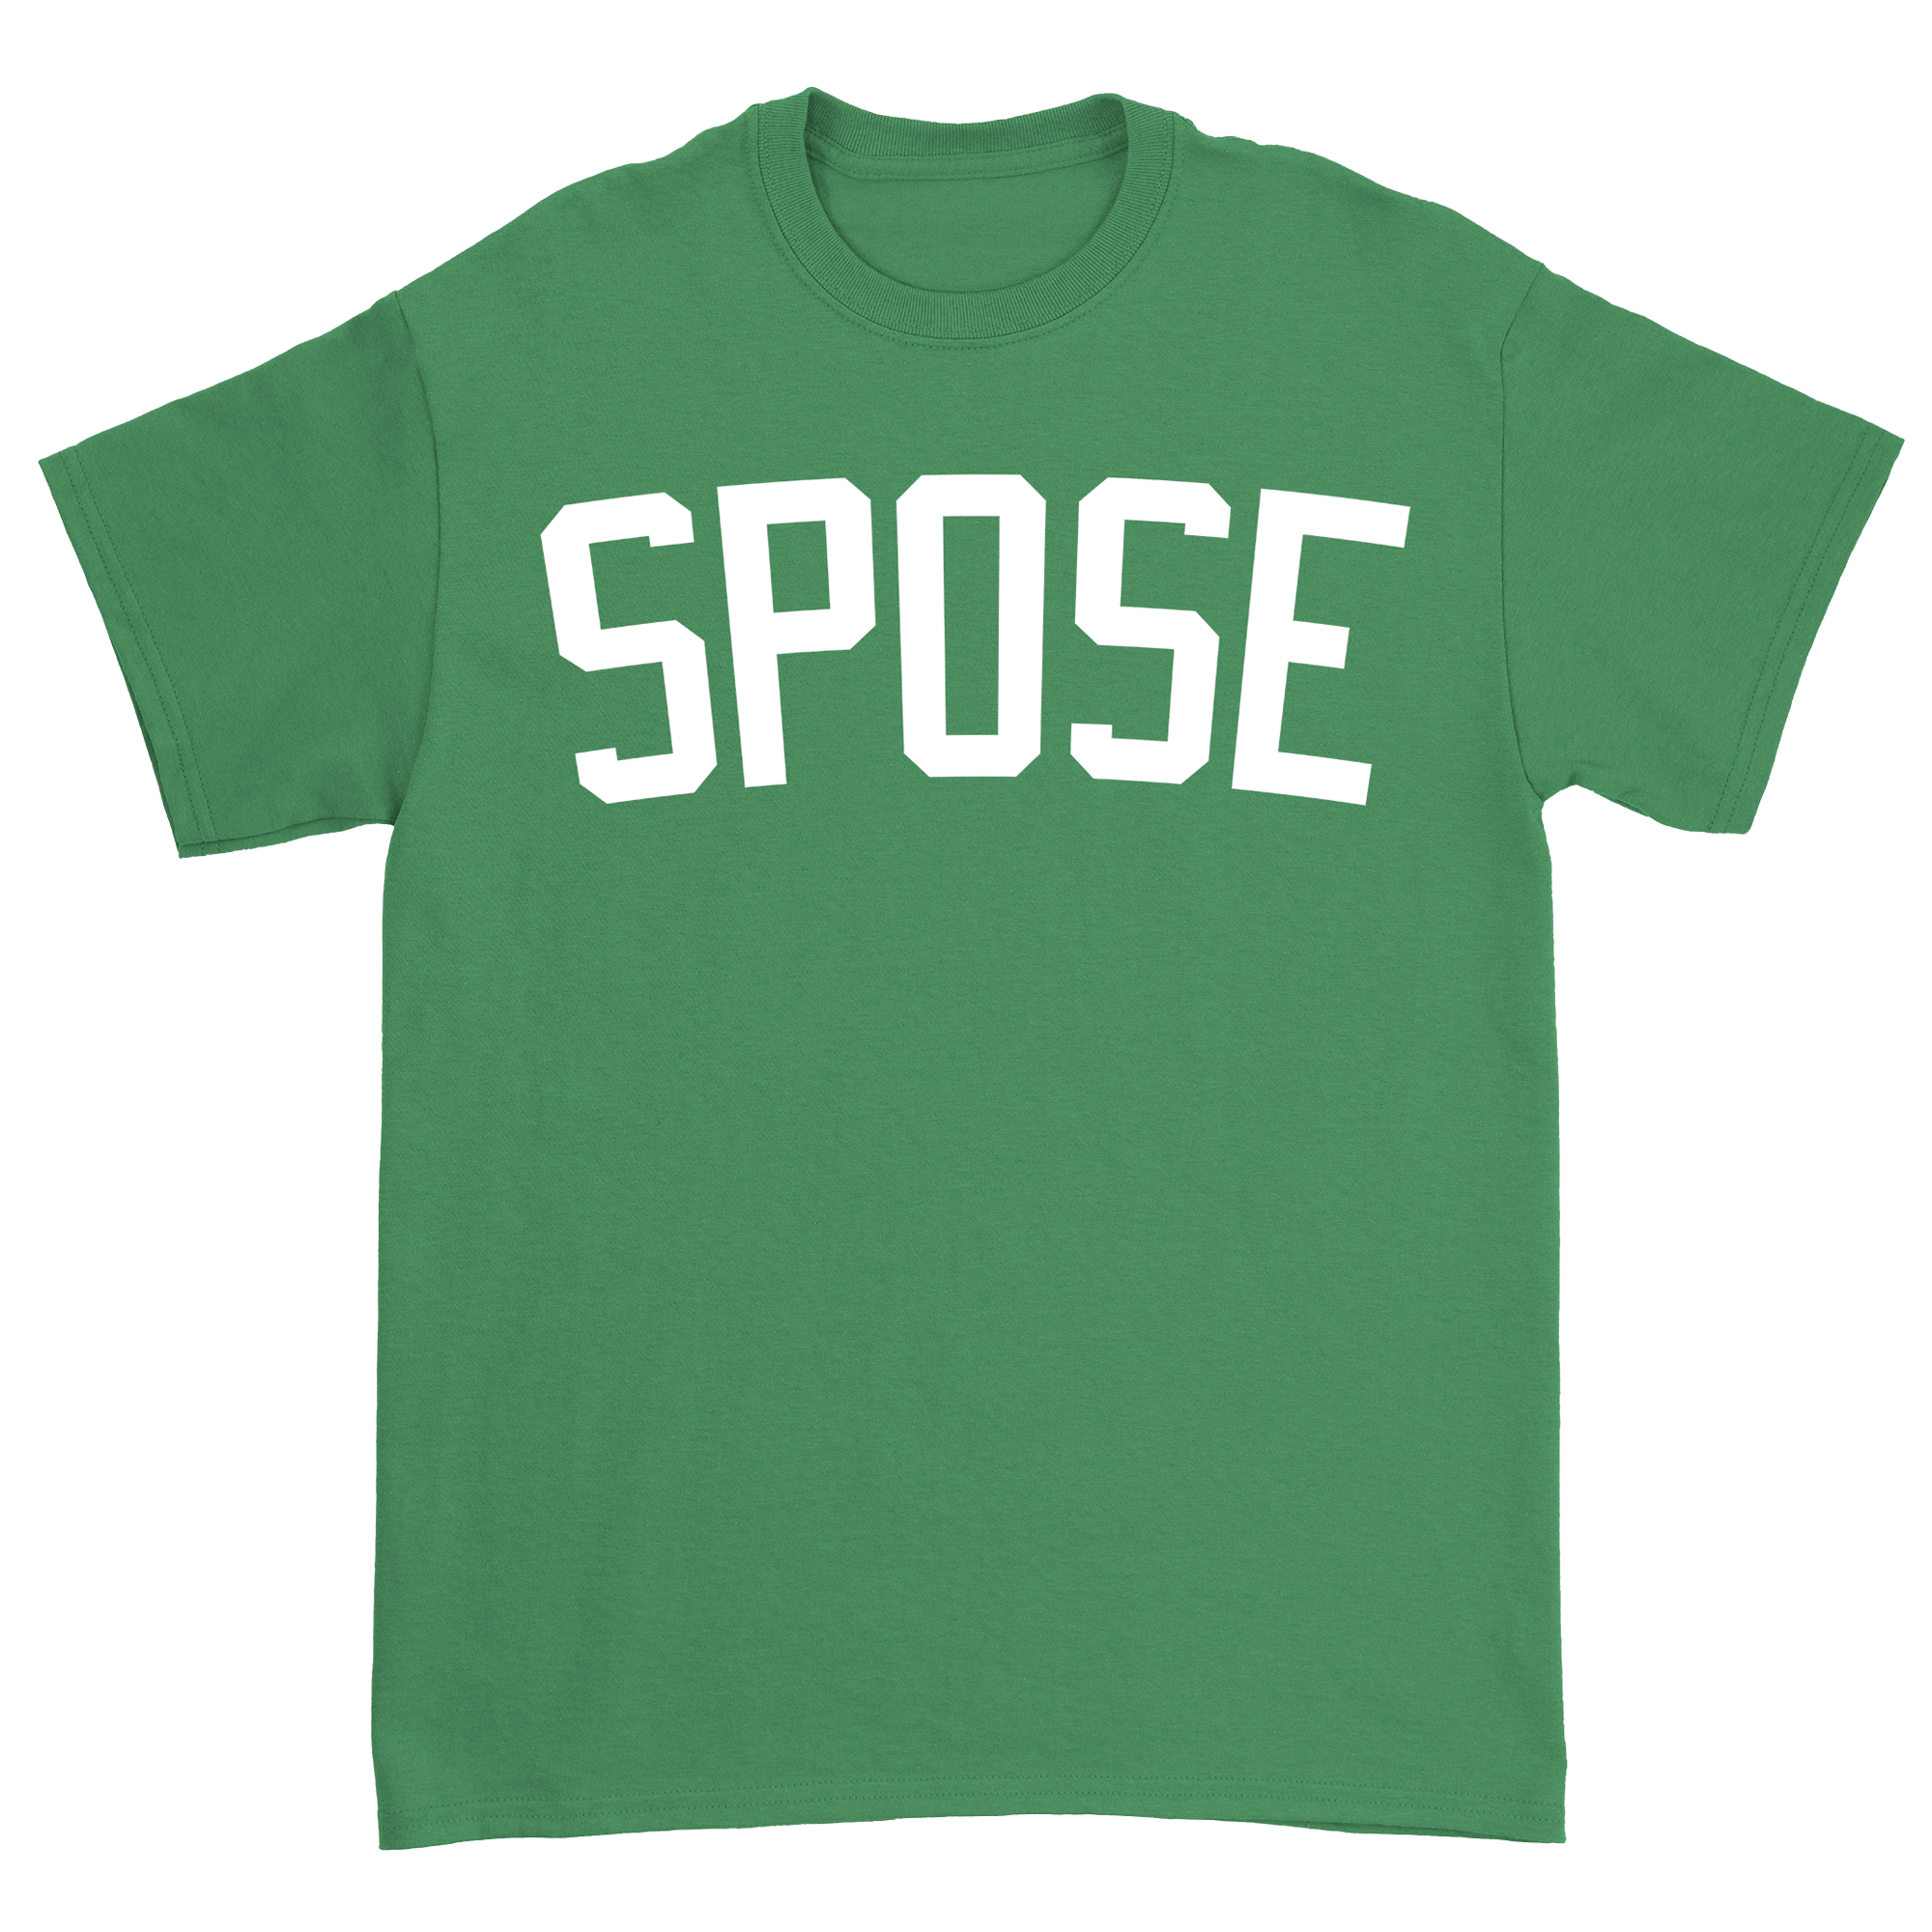 Spose - Altima T-Shirt (Pre-Order)